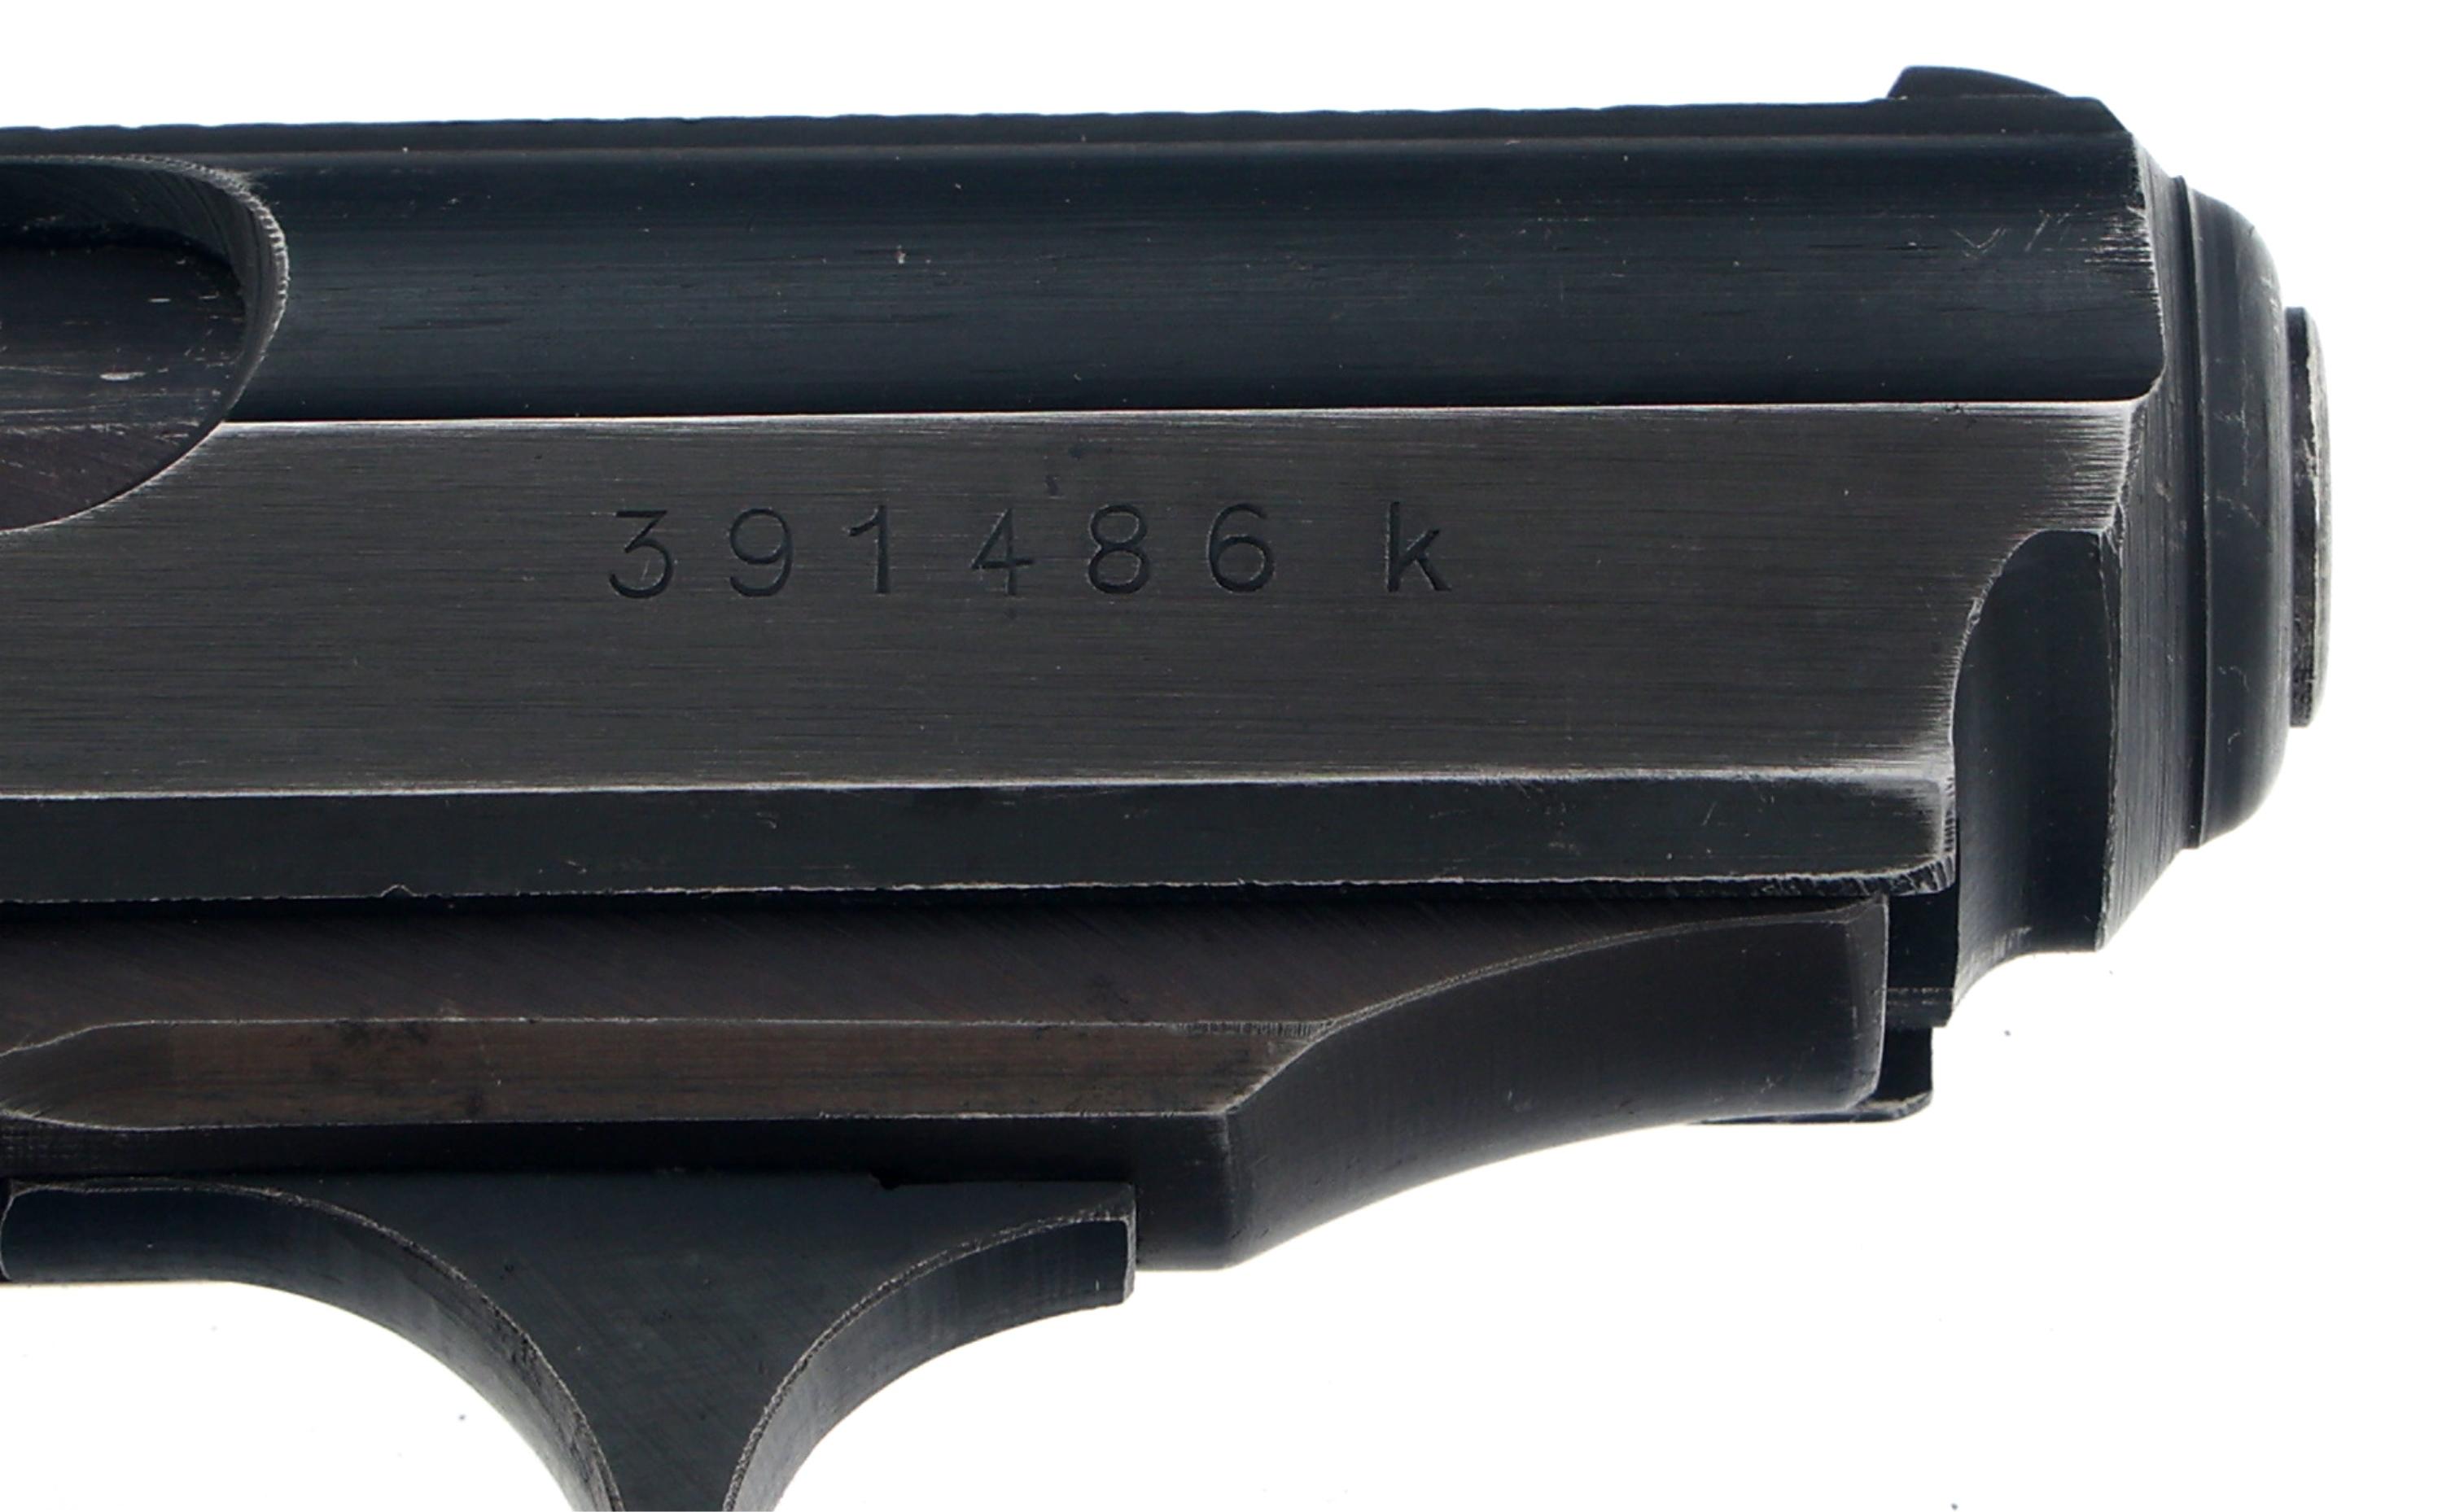 WALTHER MODEL PPK 7.65mm CALIBER SEMI AUTO PISTOL